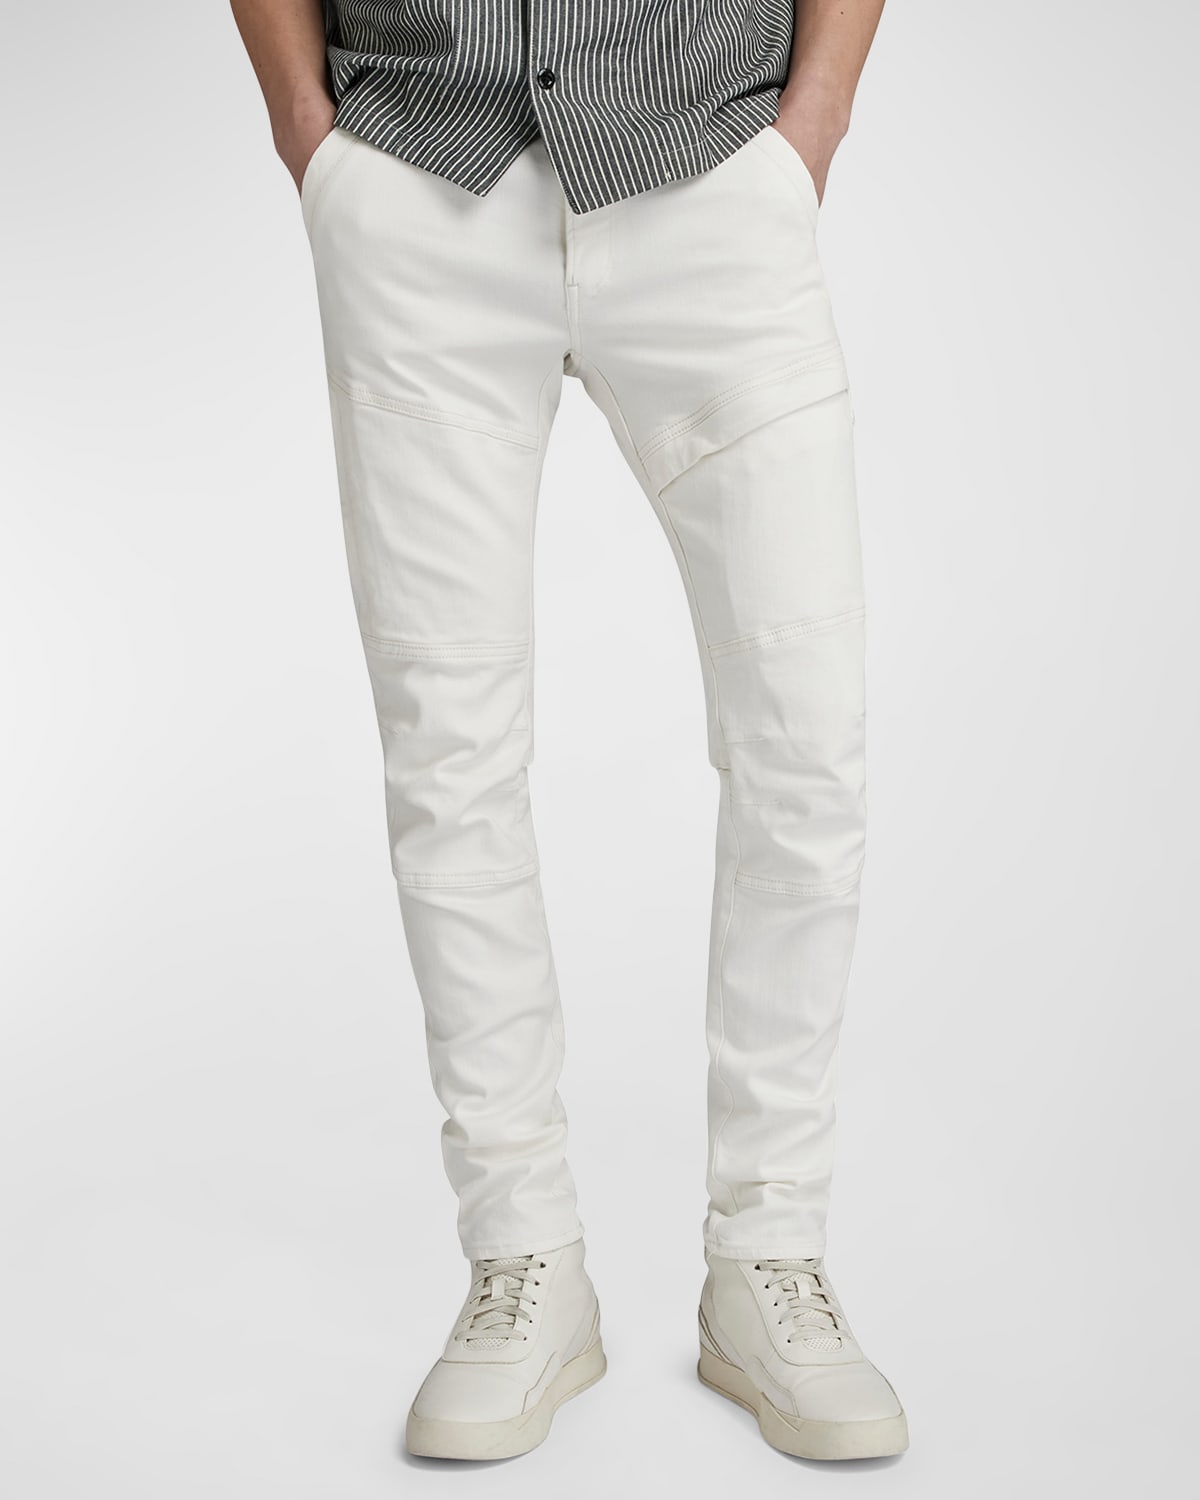 G-STAR RAW Men's Rackam 3D Skinny Jeans